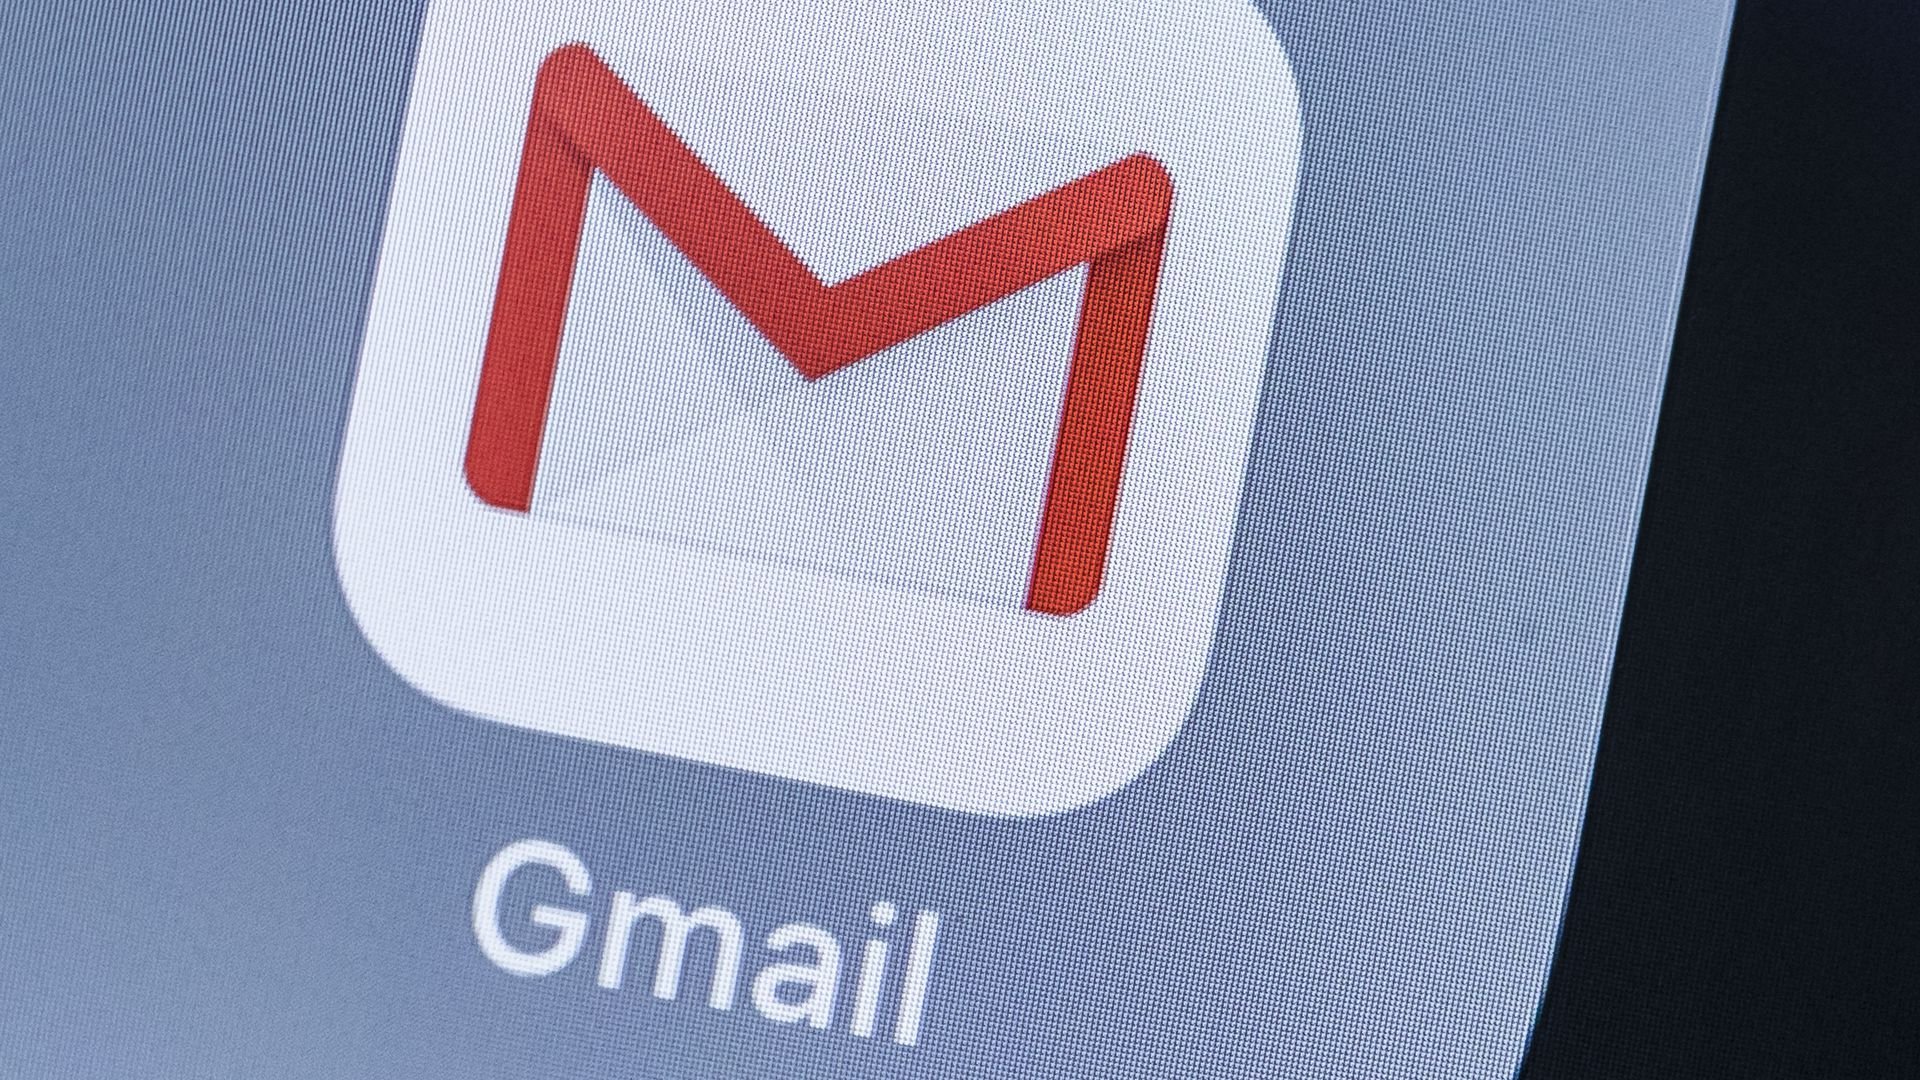 GOP's Gmail feud escalates